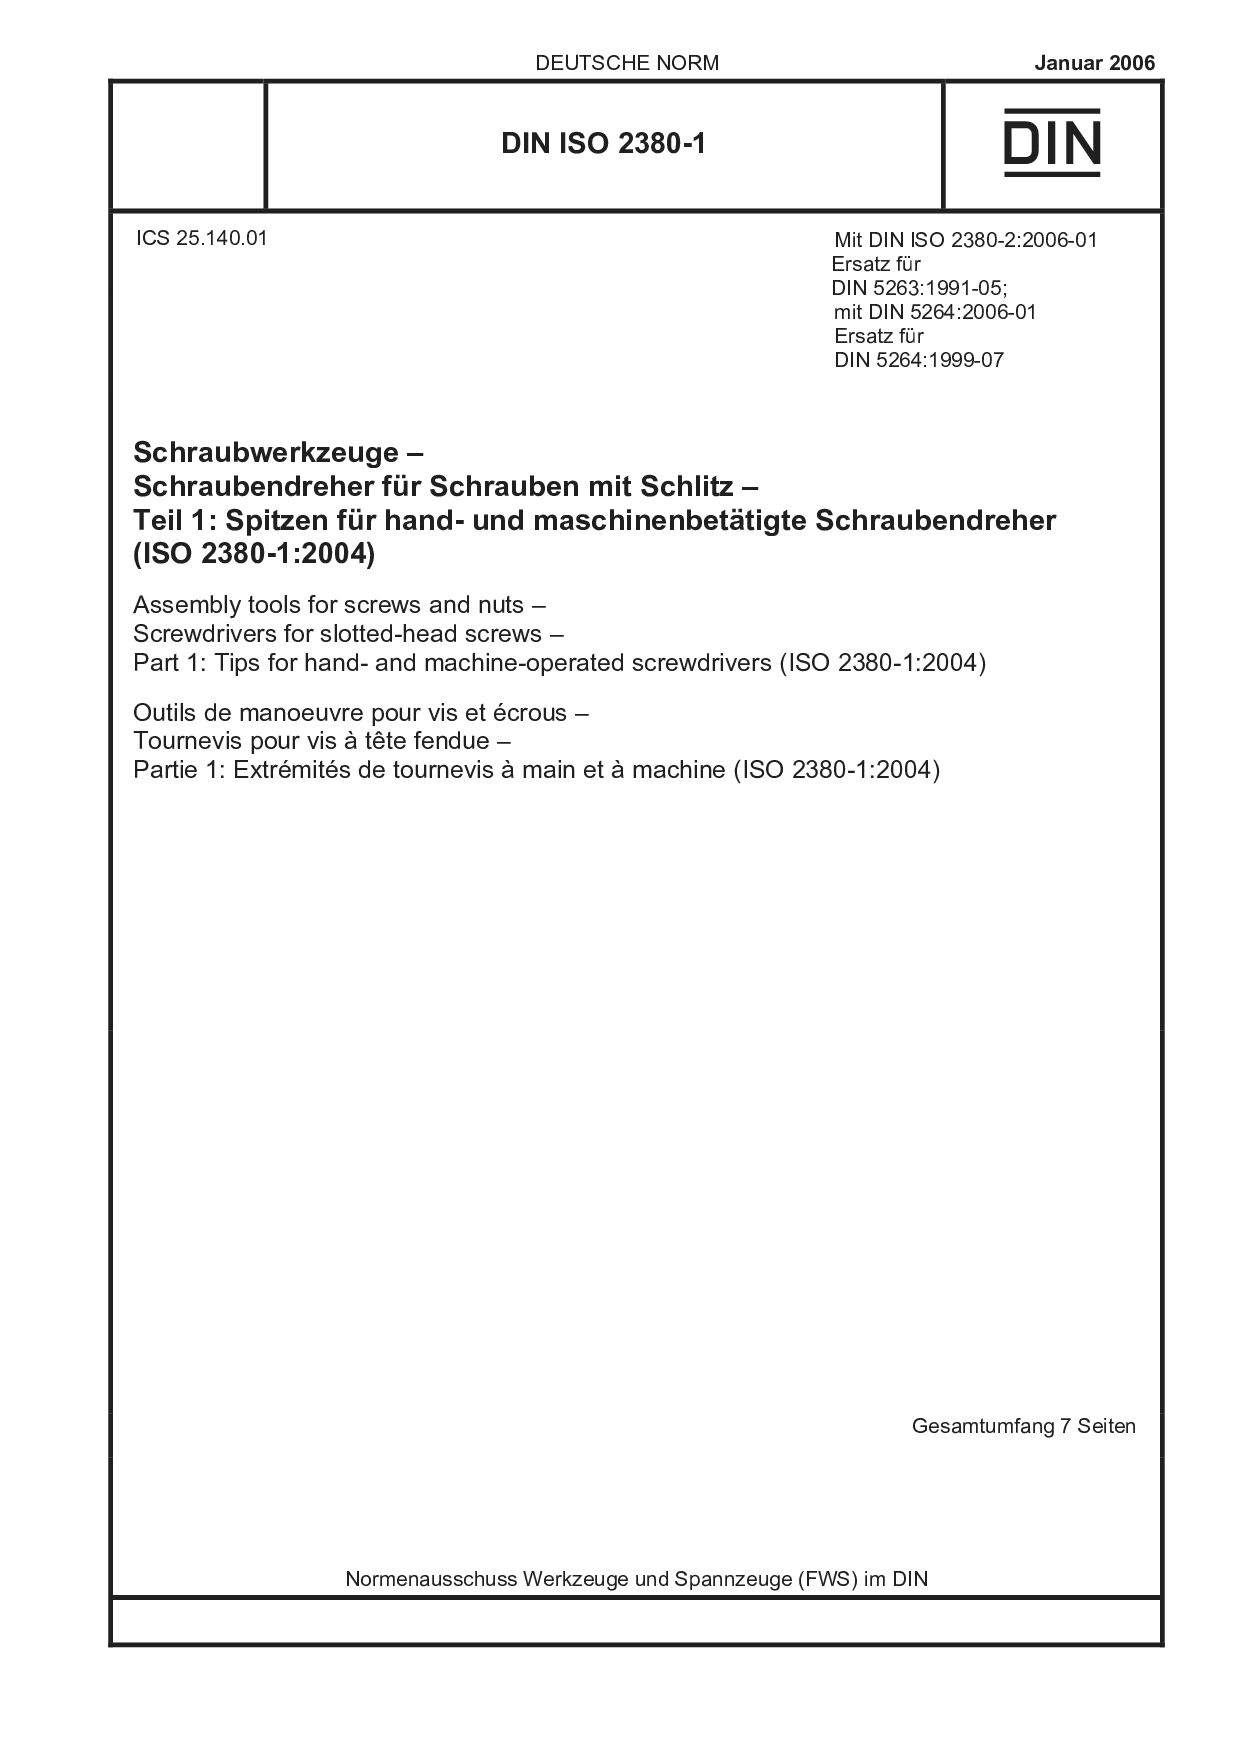 DIN ISO 2380-1:2006-01